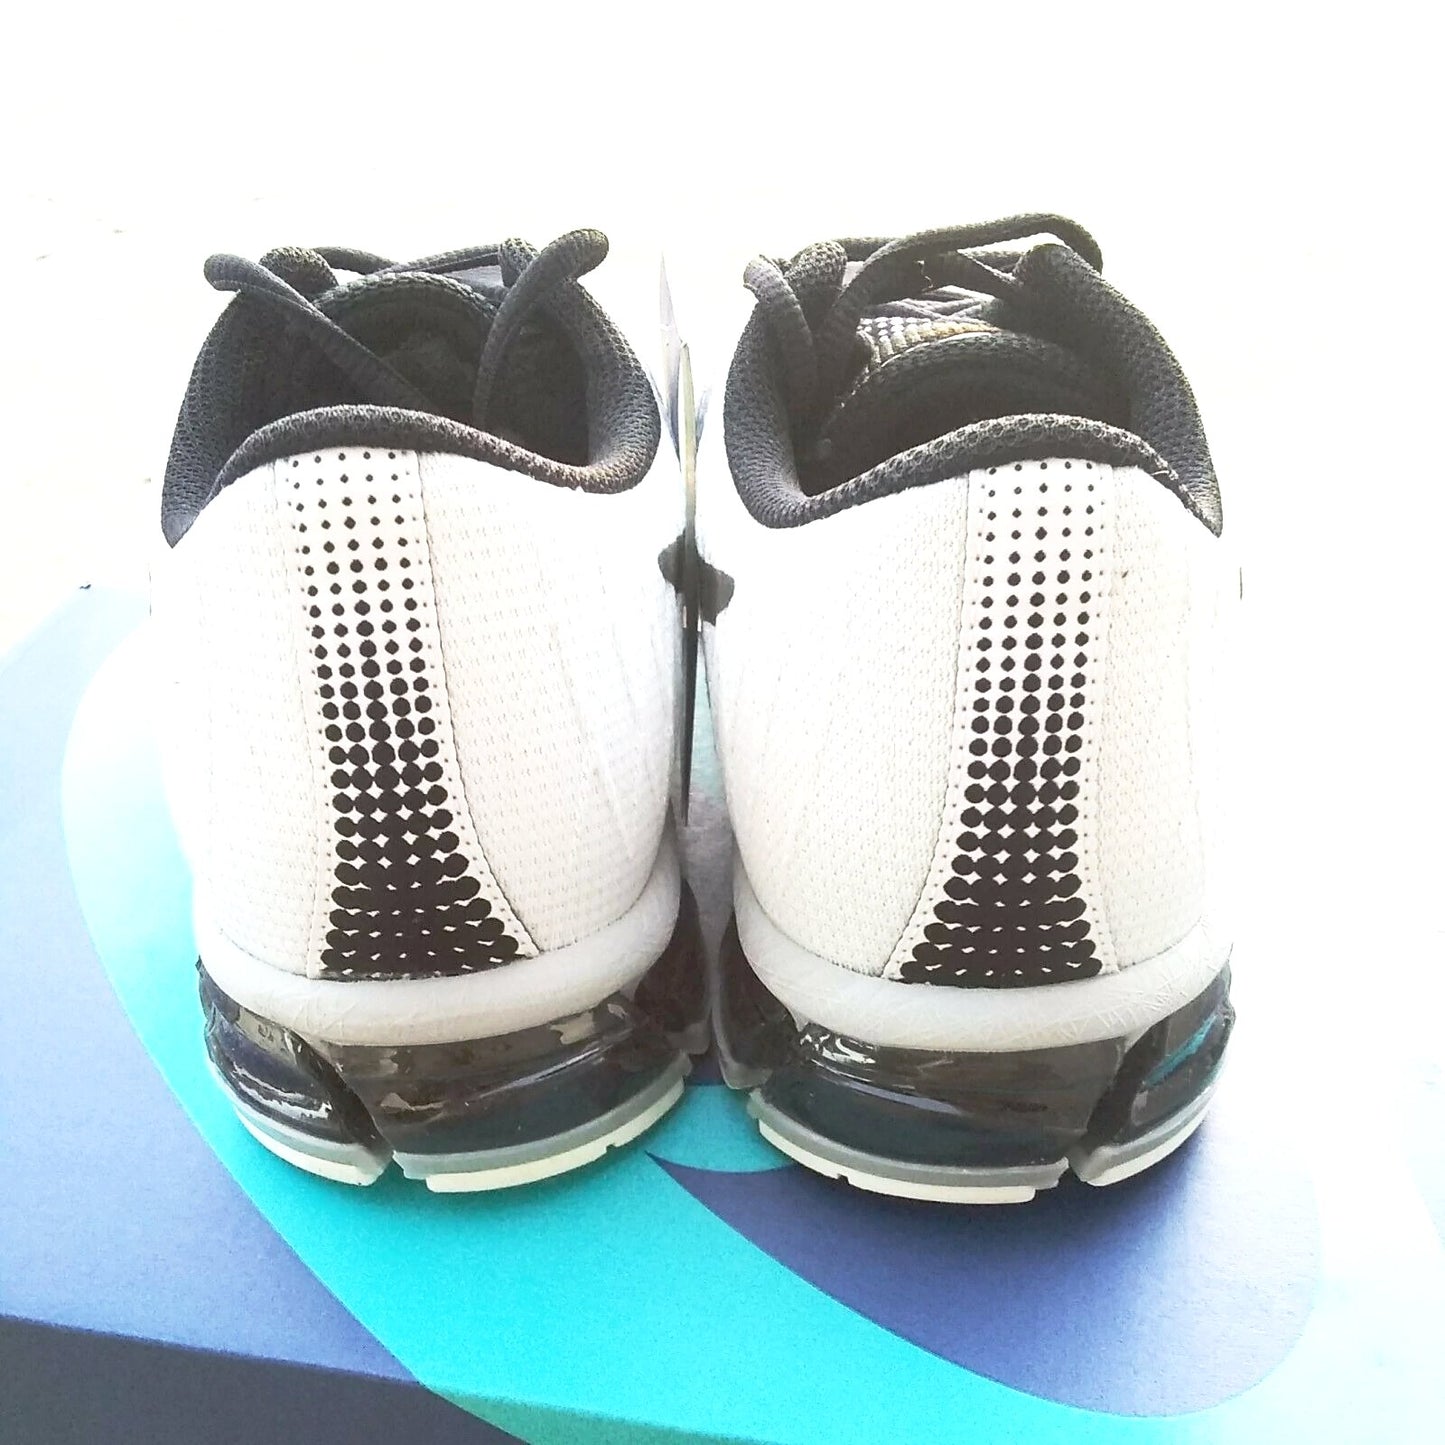 Asics men's Gel Quantum 180 4 Black White running shoes Size 11.5 US